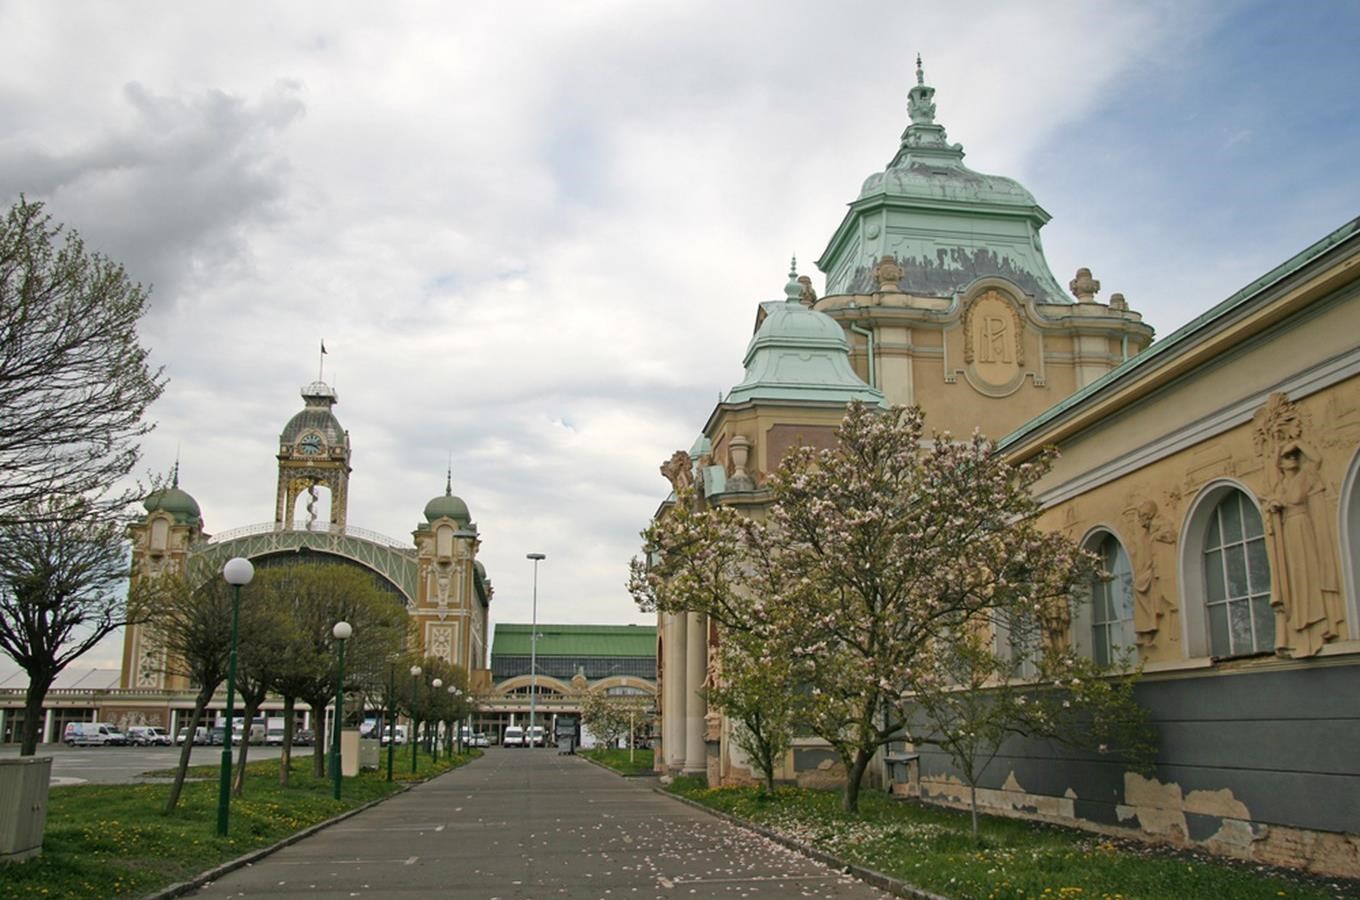 Lapidárium Národního muzea